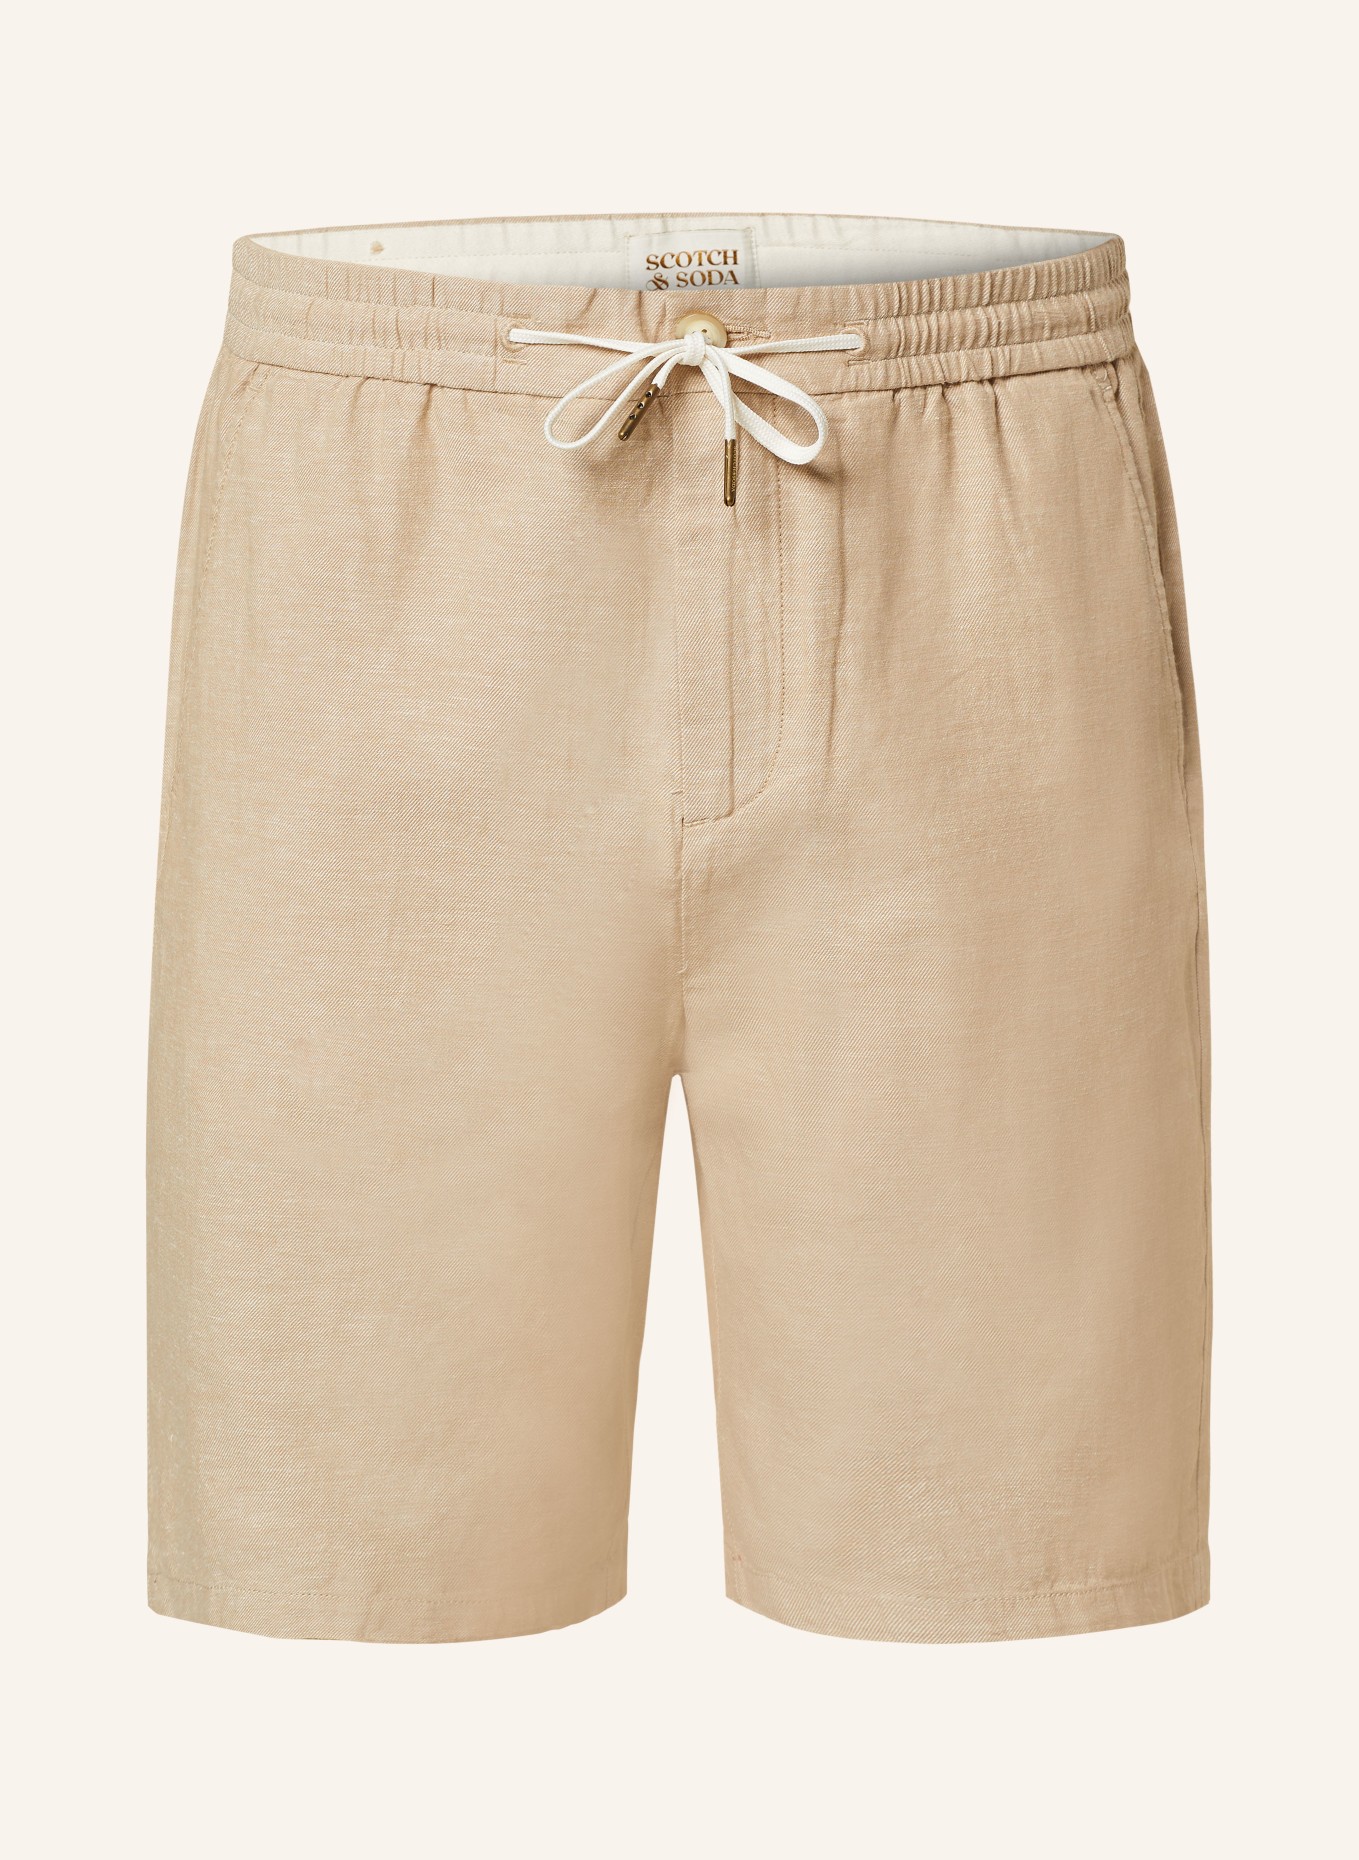 SCOTCH & SODA Shorts FAVE, Farbe: BEIGE (Bild 1)